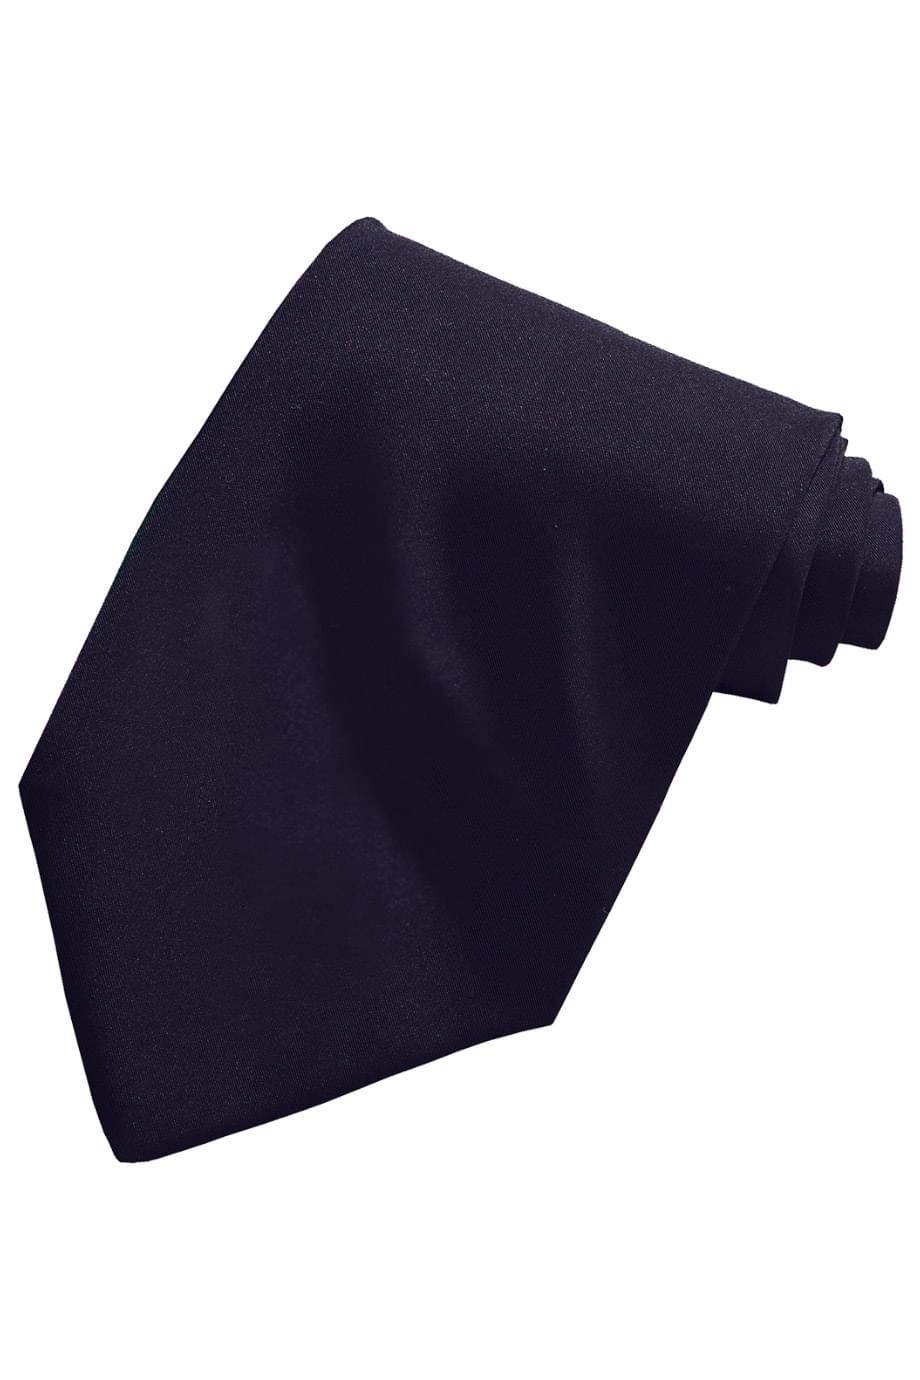 Edwards Garment SD00 - Solid Tie